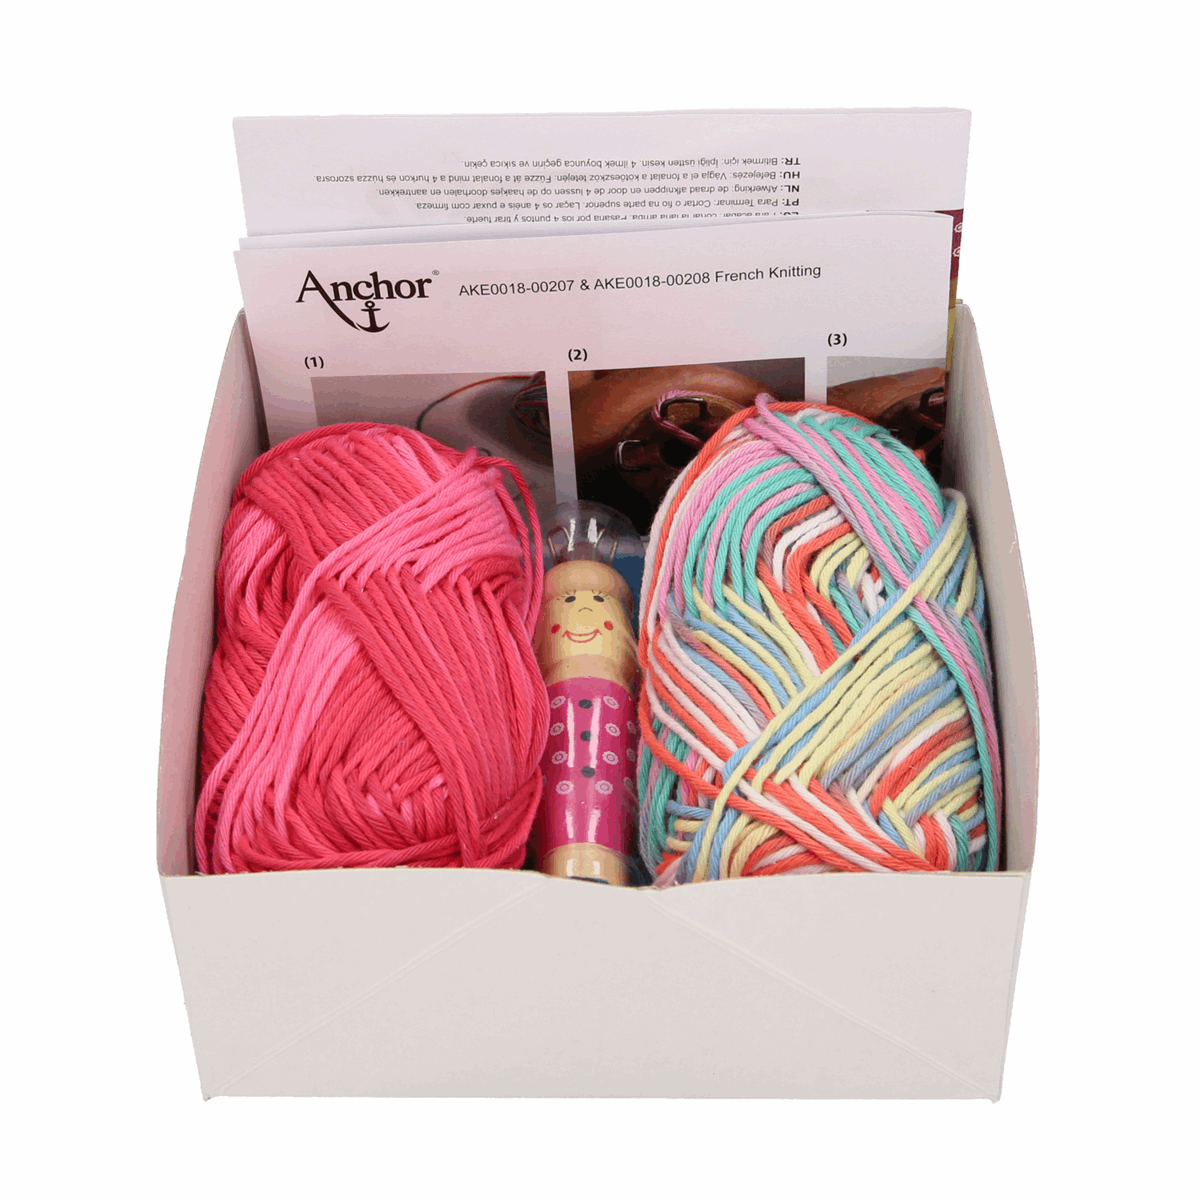 Anchor French Knitting Kit - Bright